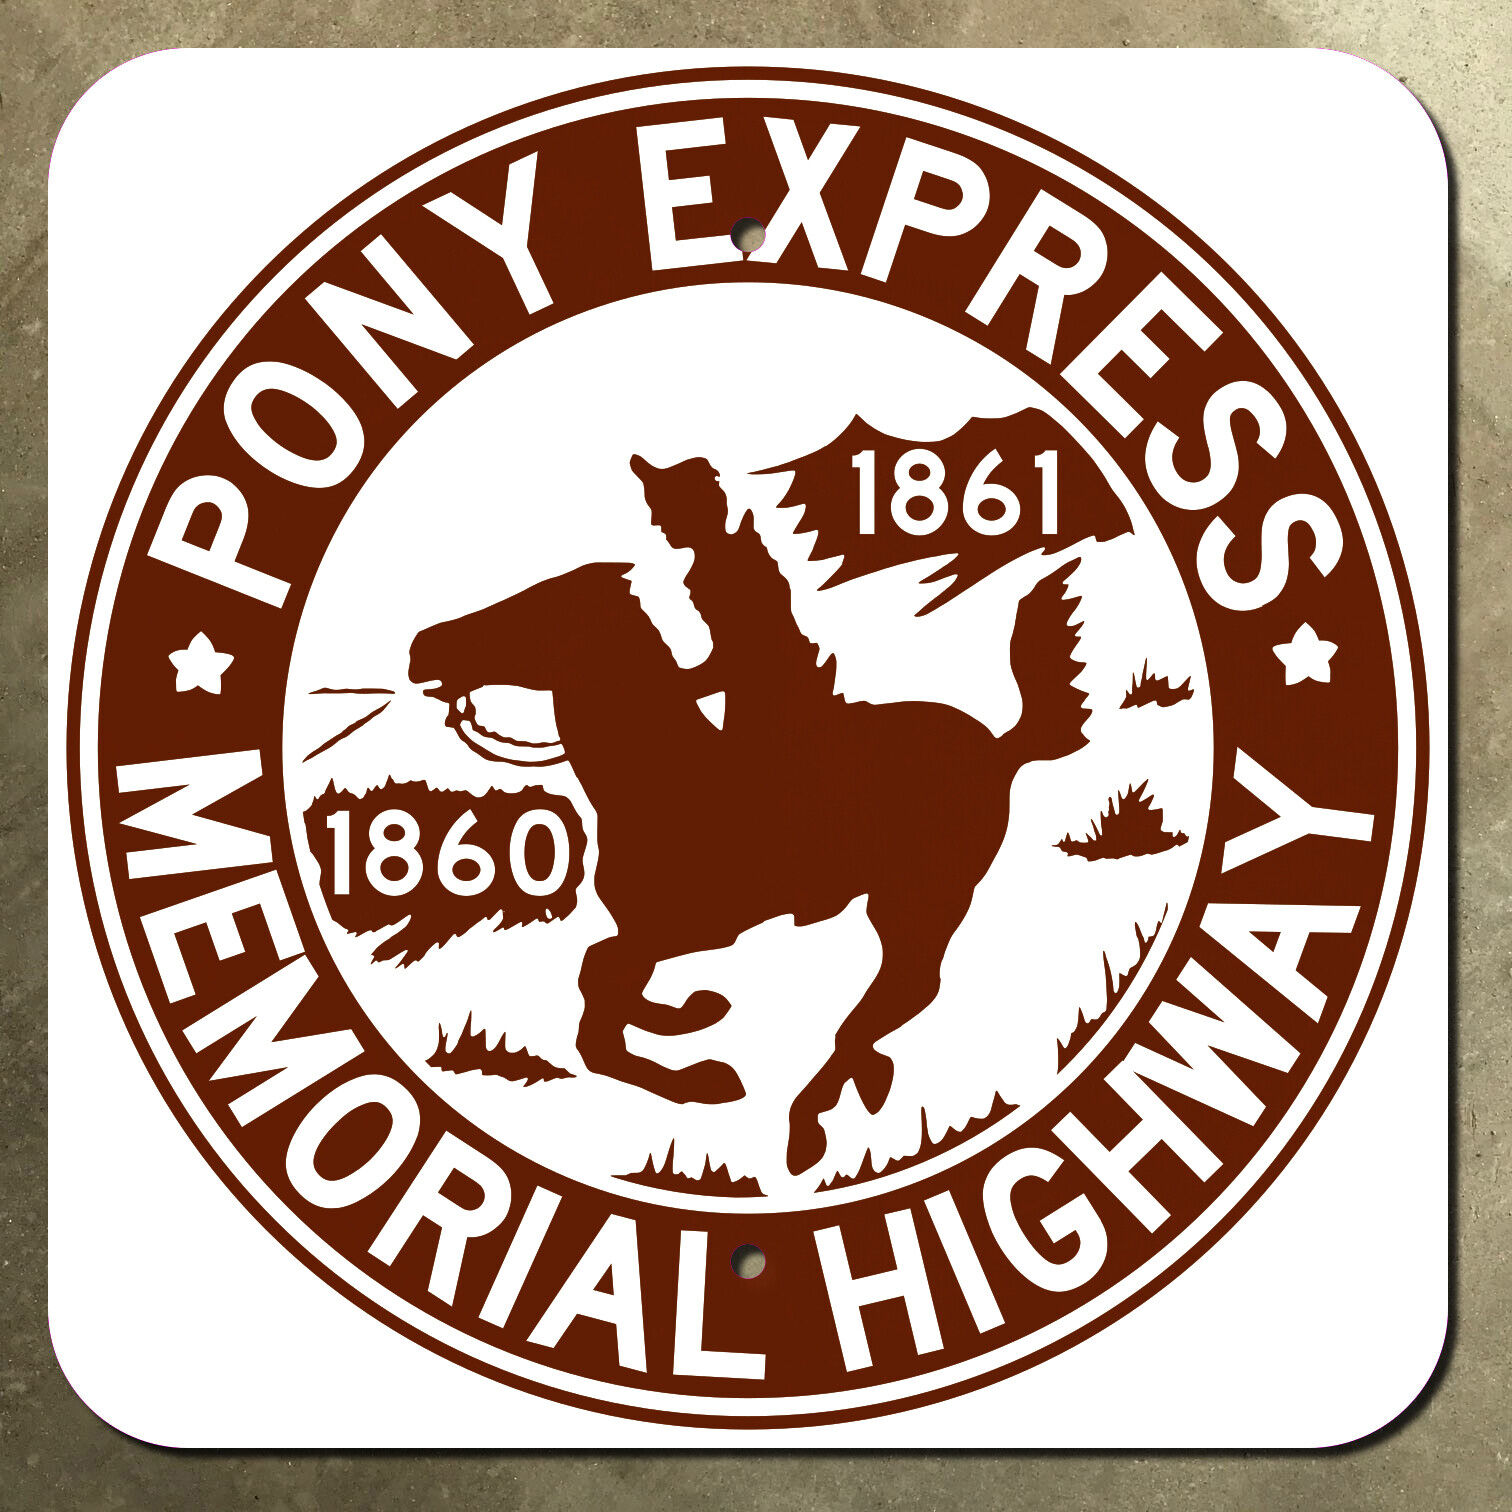 Kansas Pony Express Memorial Highway marker road sign Marysville 1860 1861 15x15